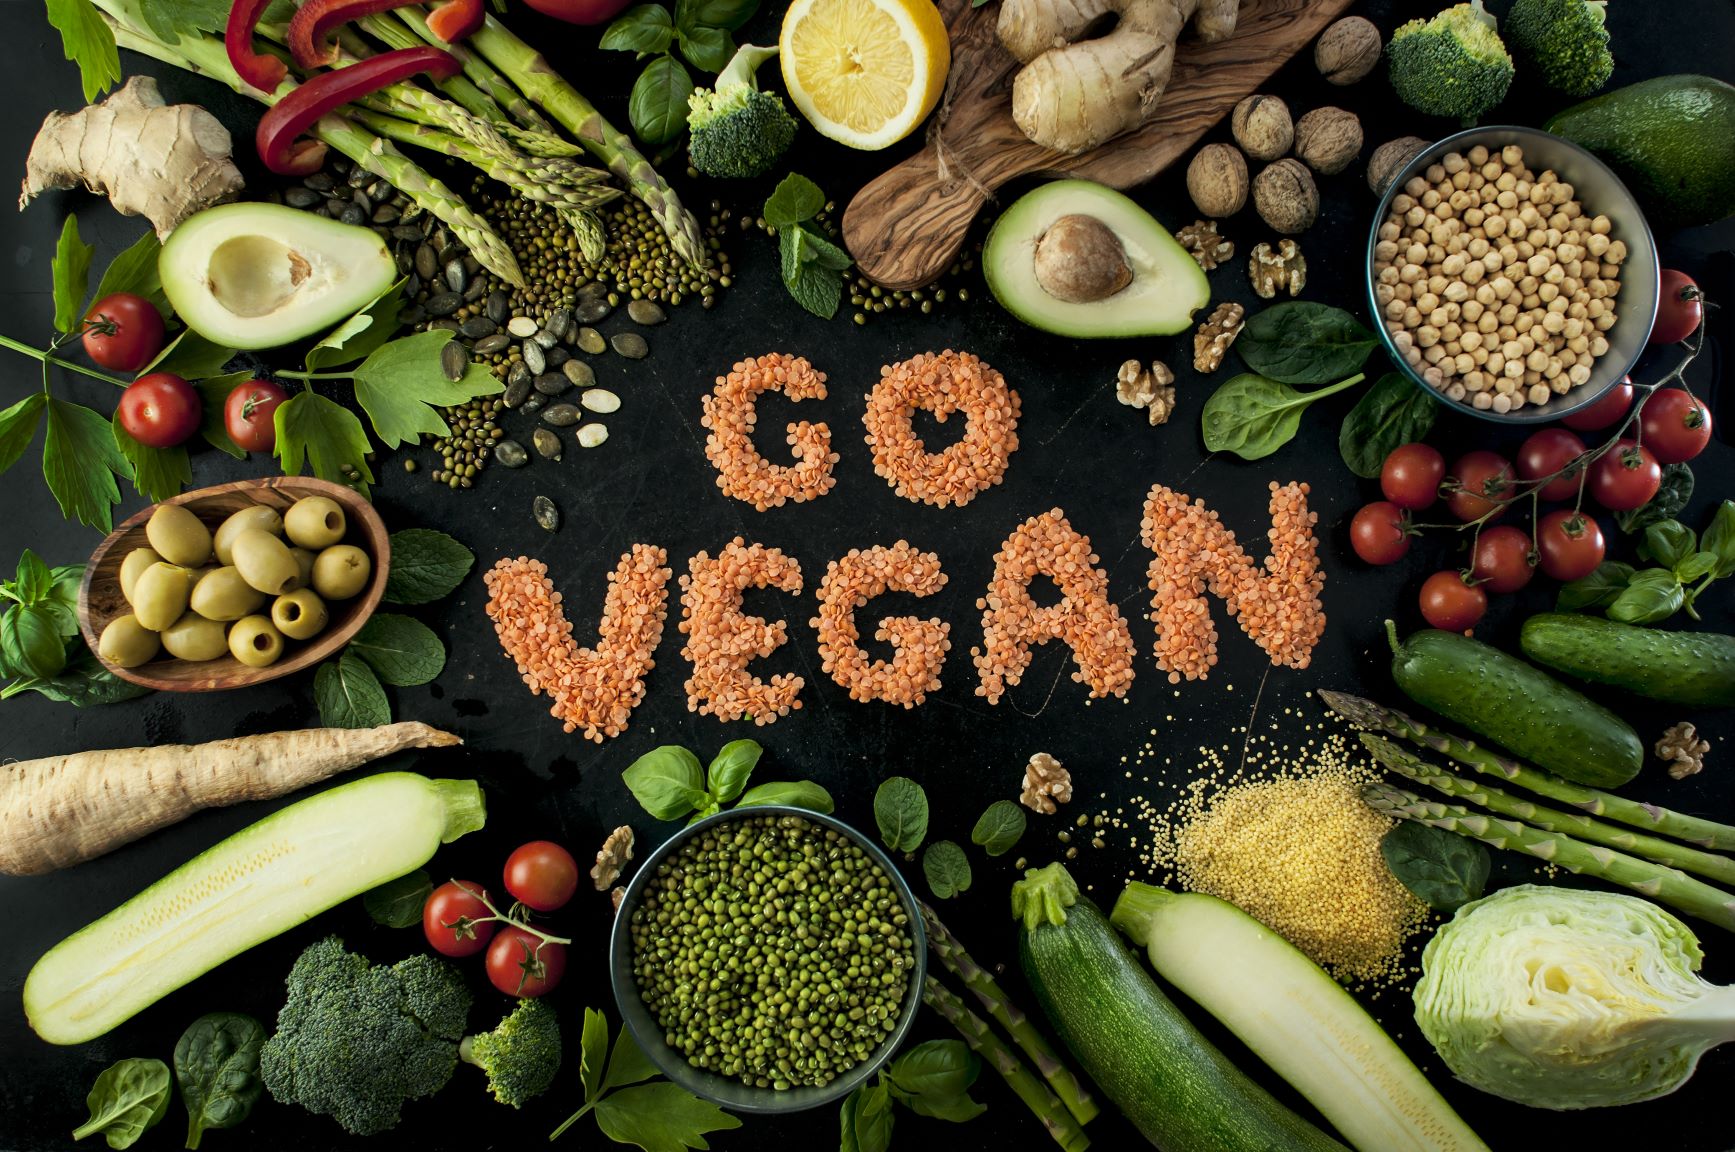 vegan συνταγές χωρίς κρέας